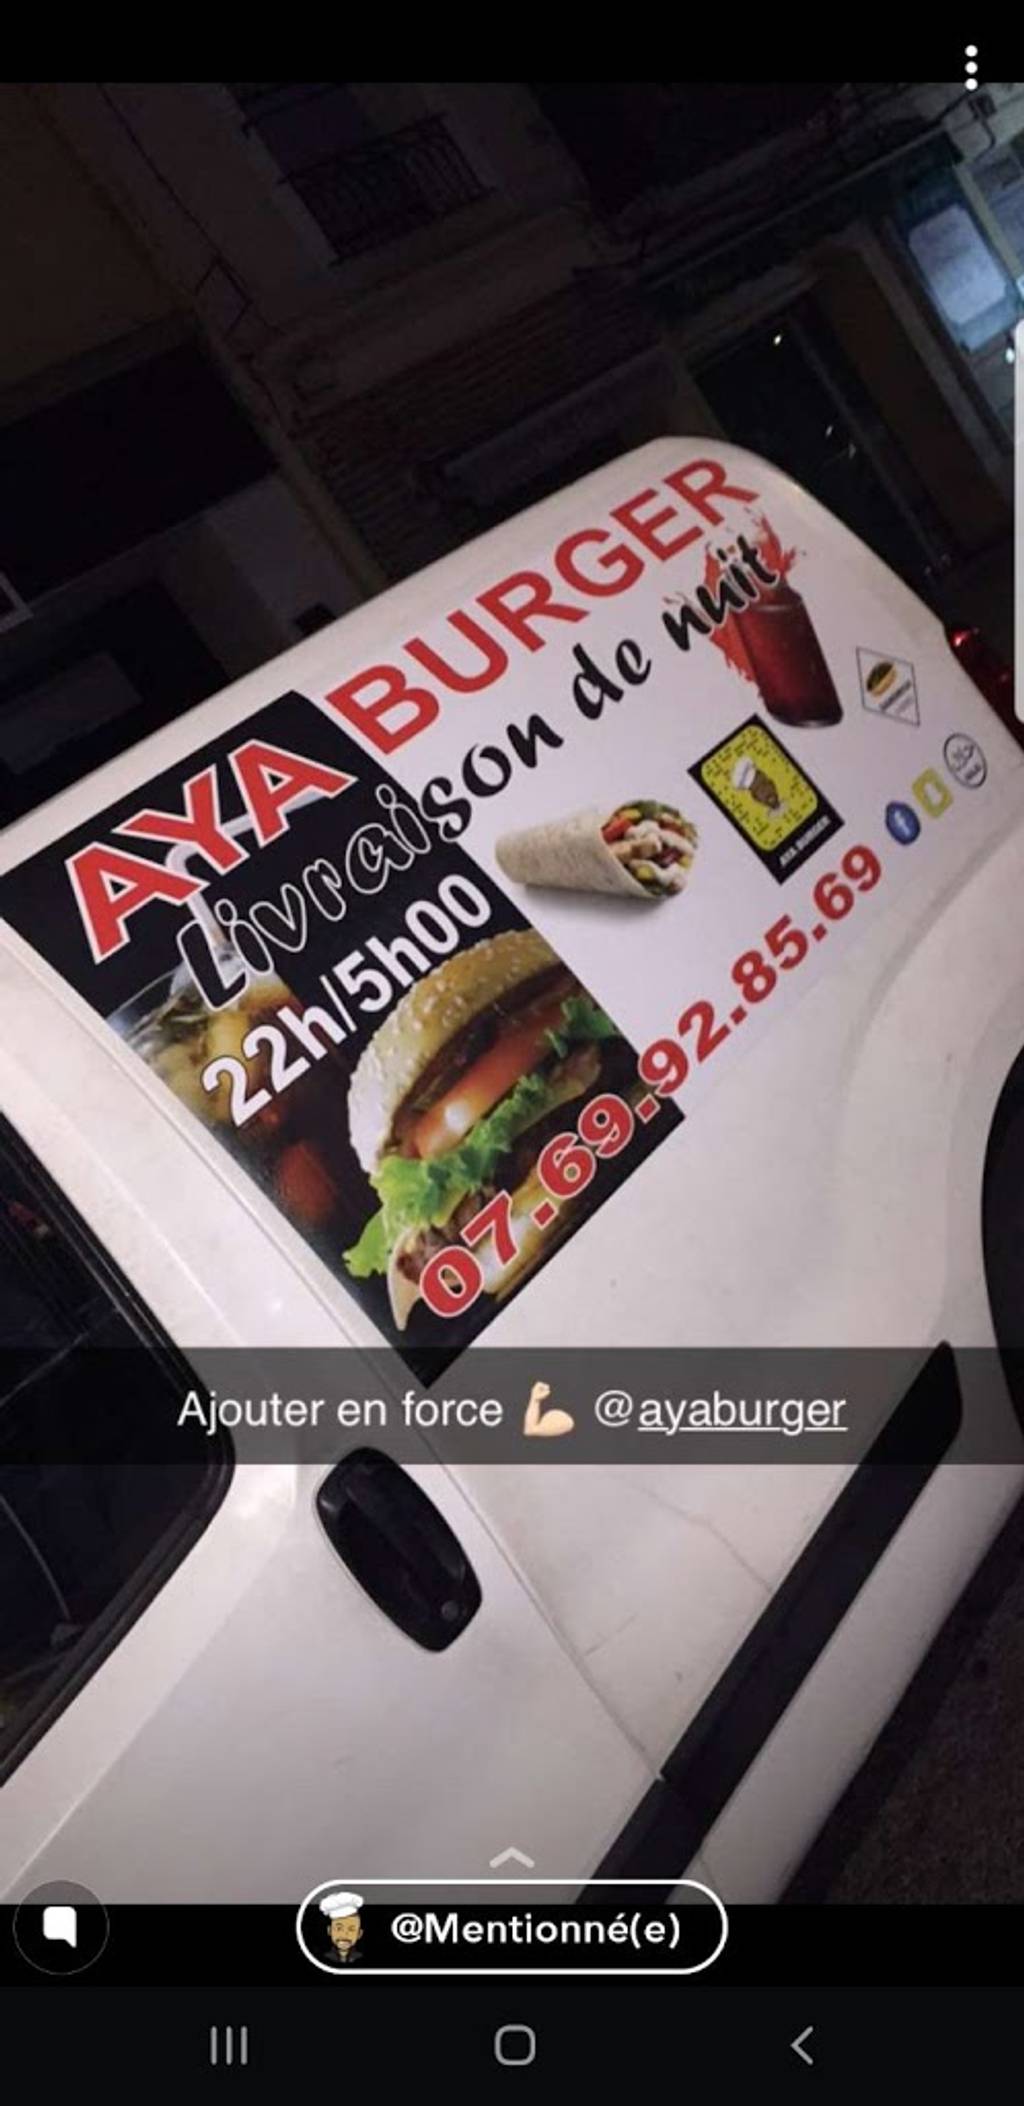 Ayaburger Burger Sète - Fast food Advertising Meal Take-out food Junk food